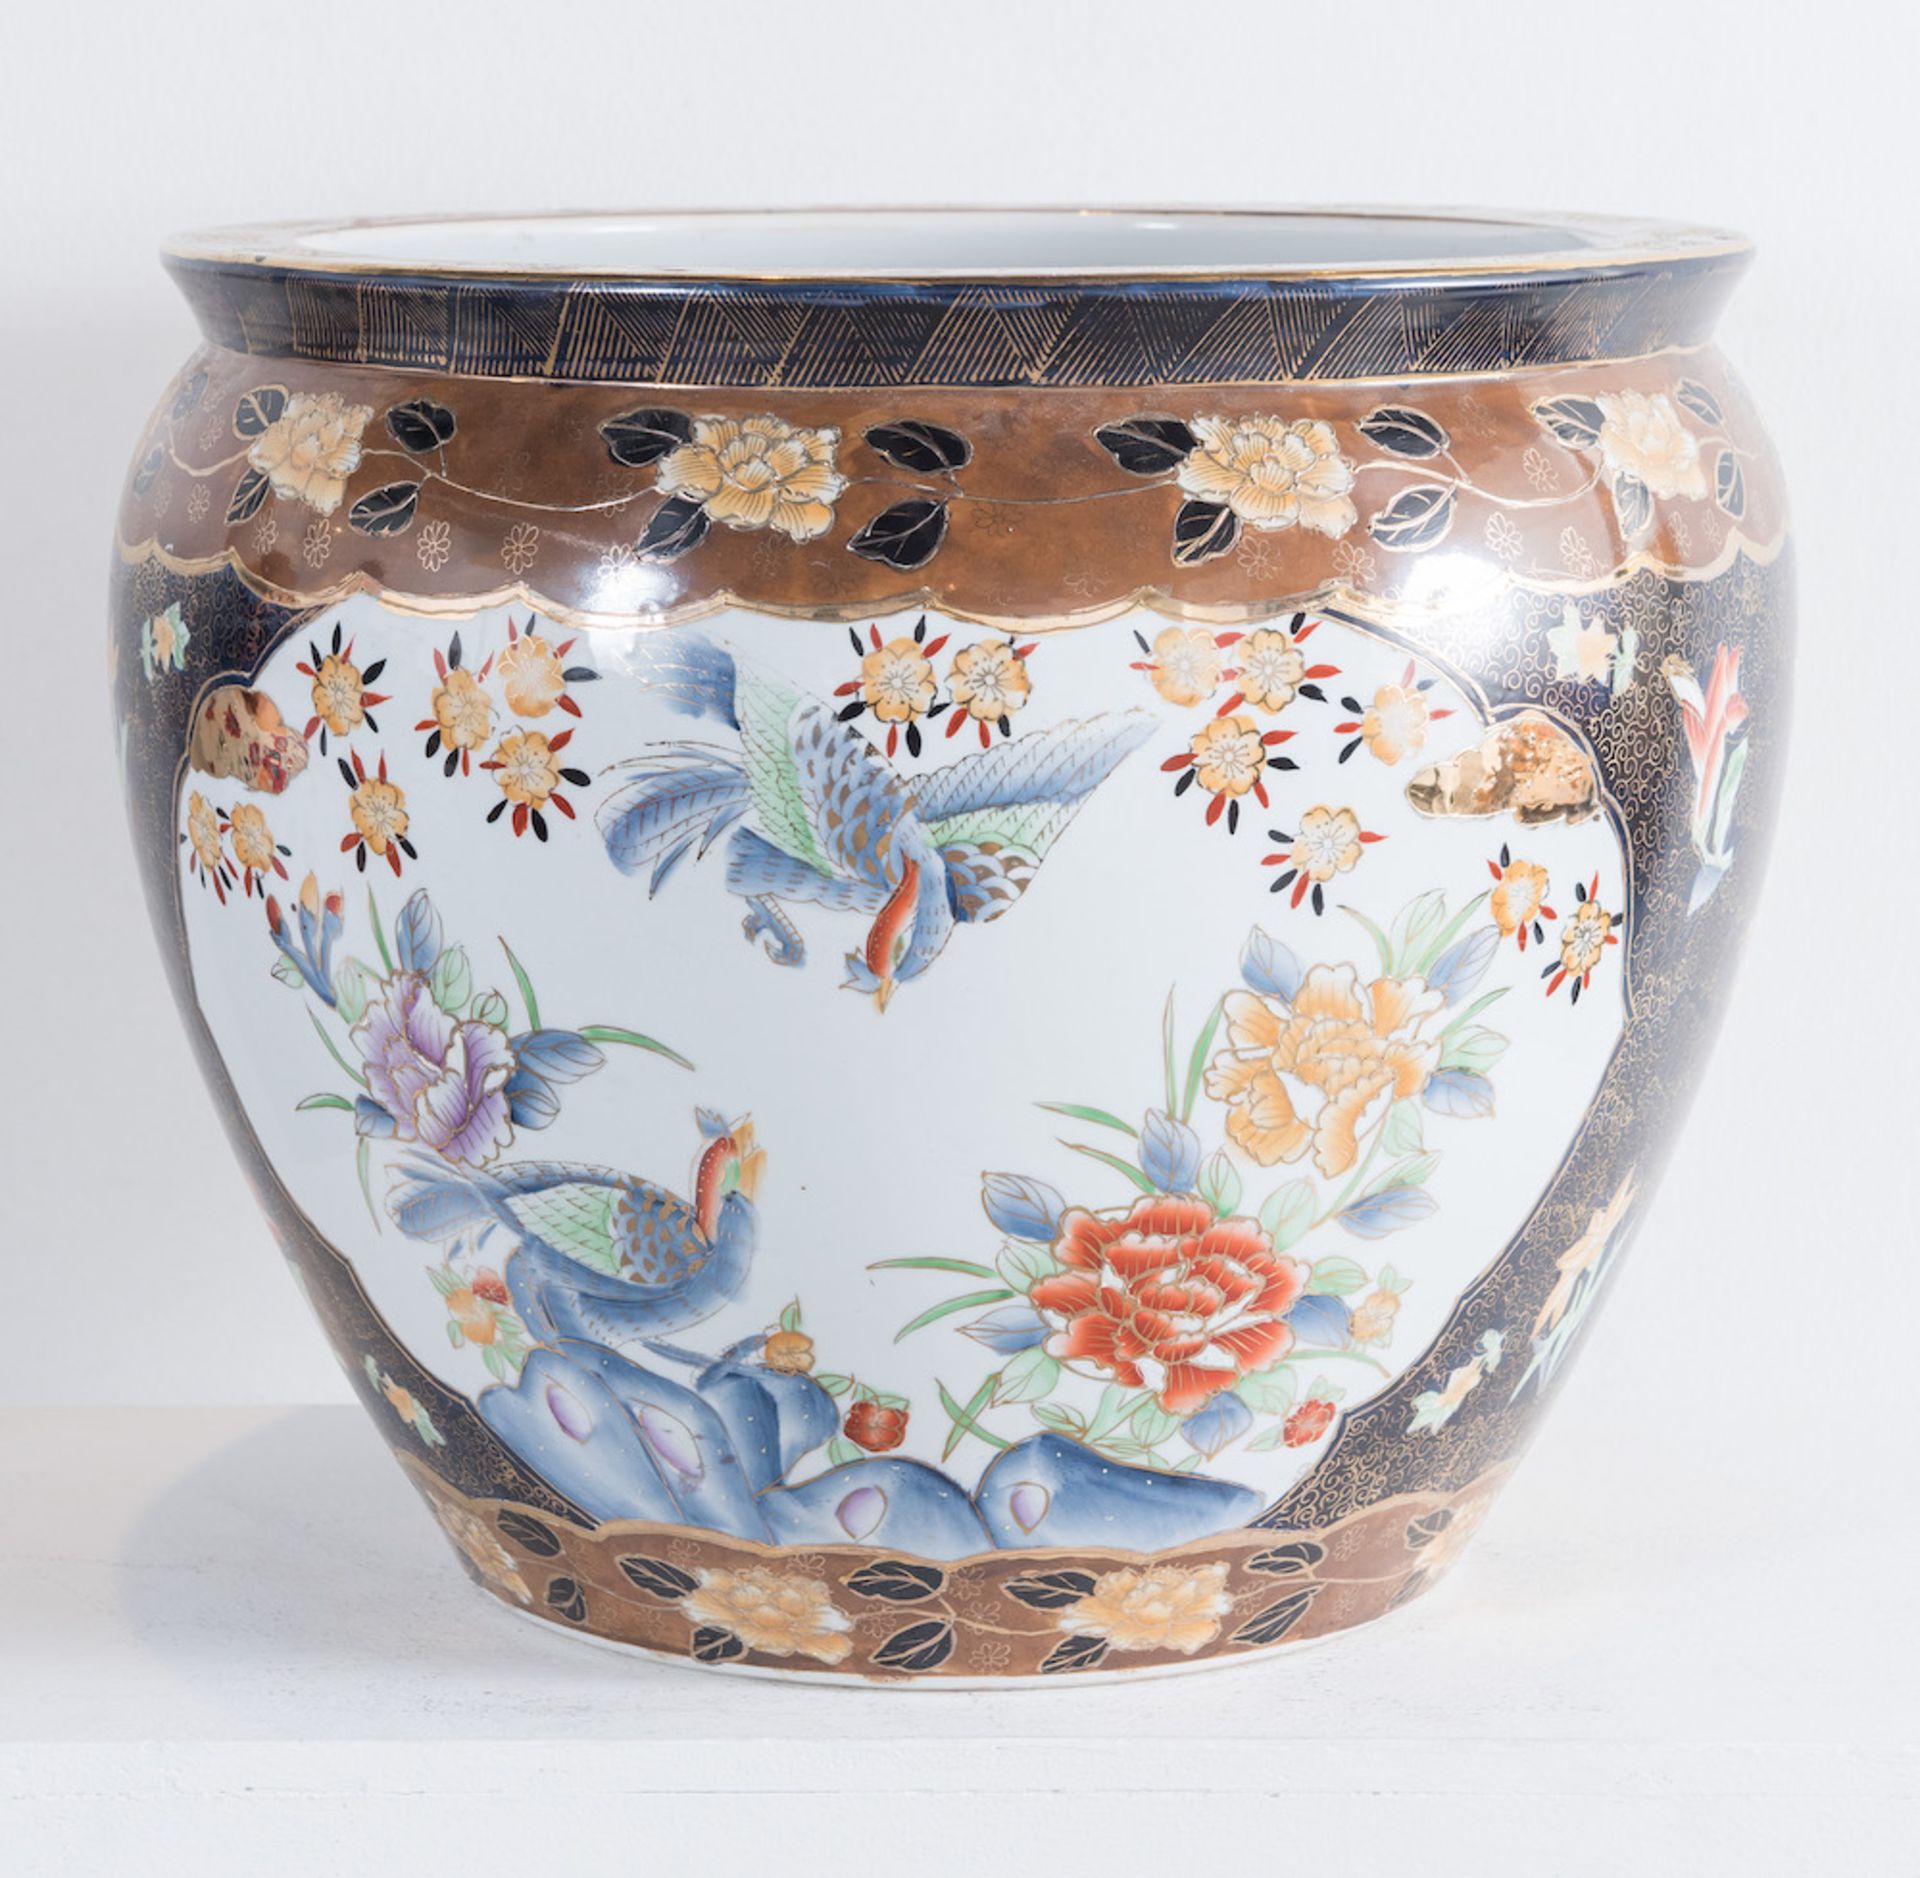 Grande cachepot in porcellana. Cina, XX secolo. Reca scene di fiori e uccelli. H. cm 44,5; diametro: